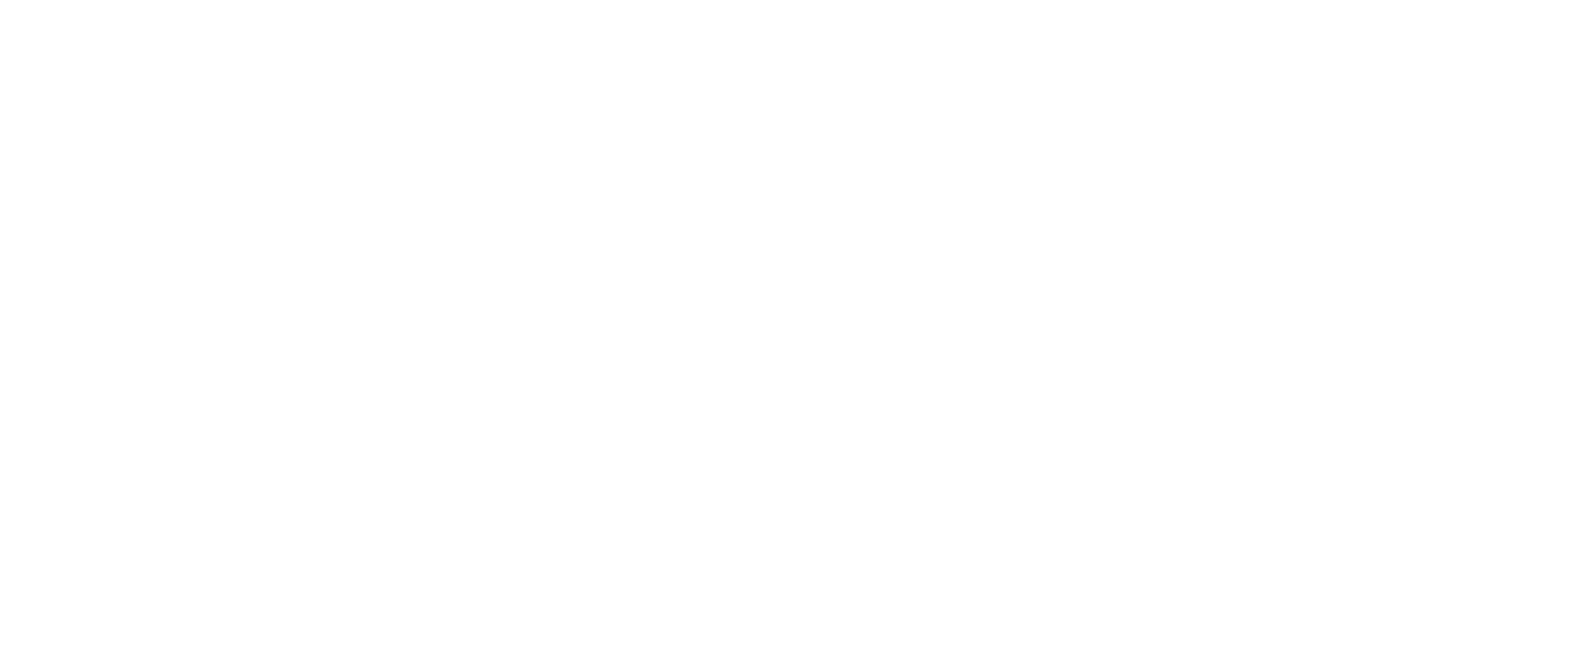 Méliuz logo large for dark backgrounds (transparent PNG)